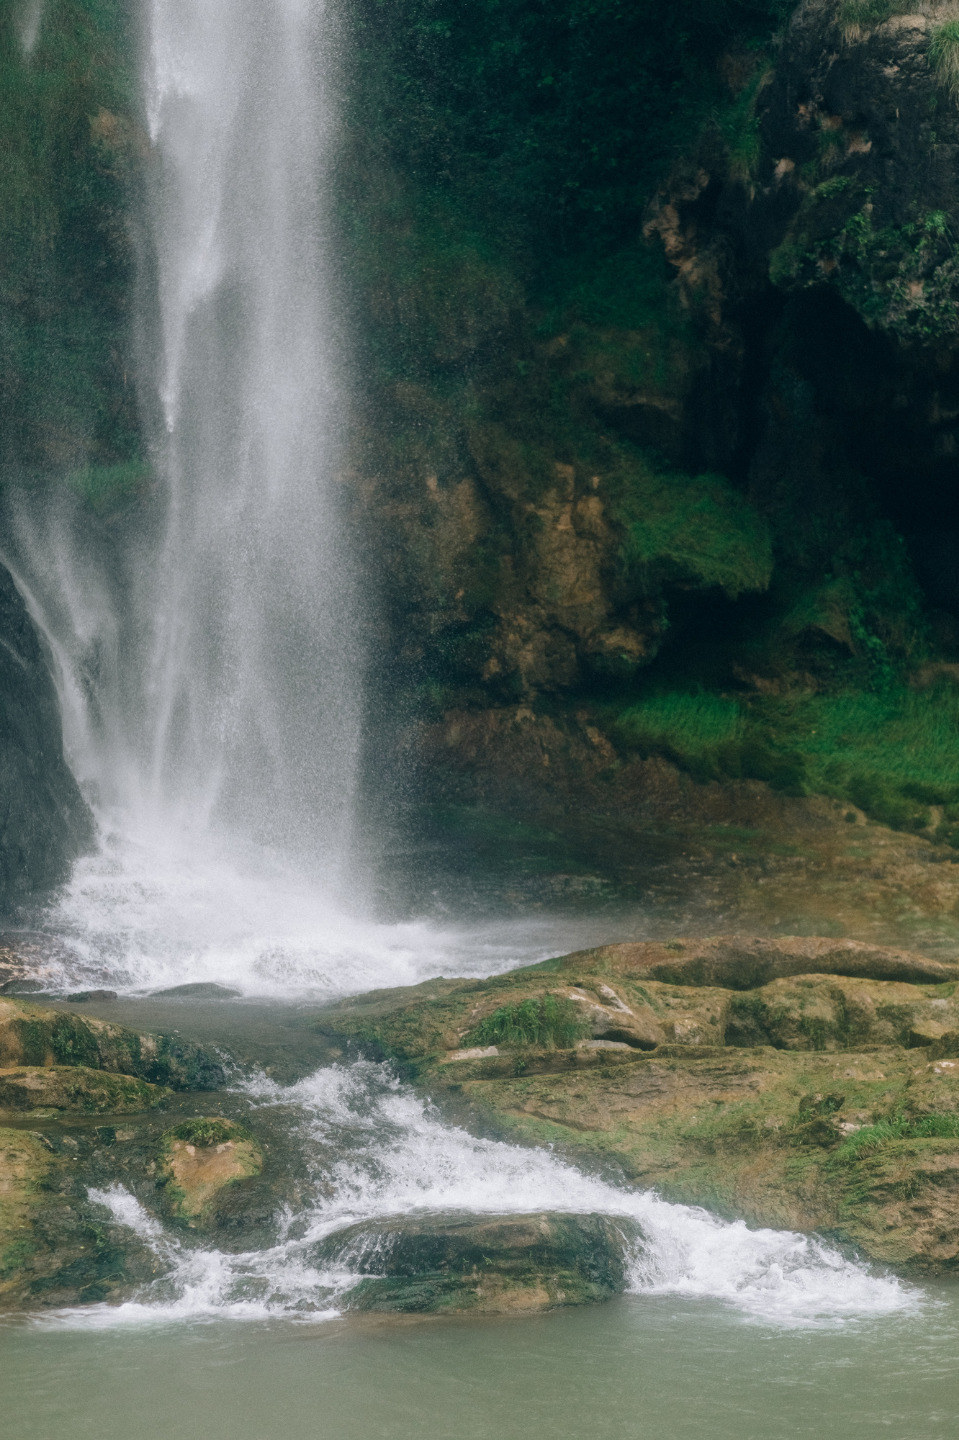 Waterfall: стилизованная фотосессия у водопада